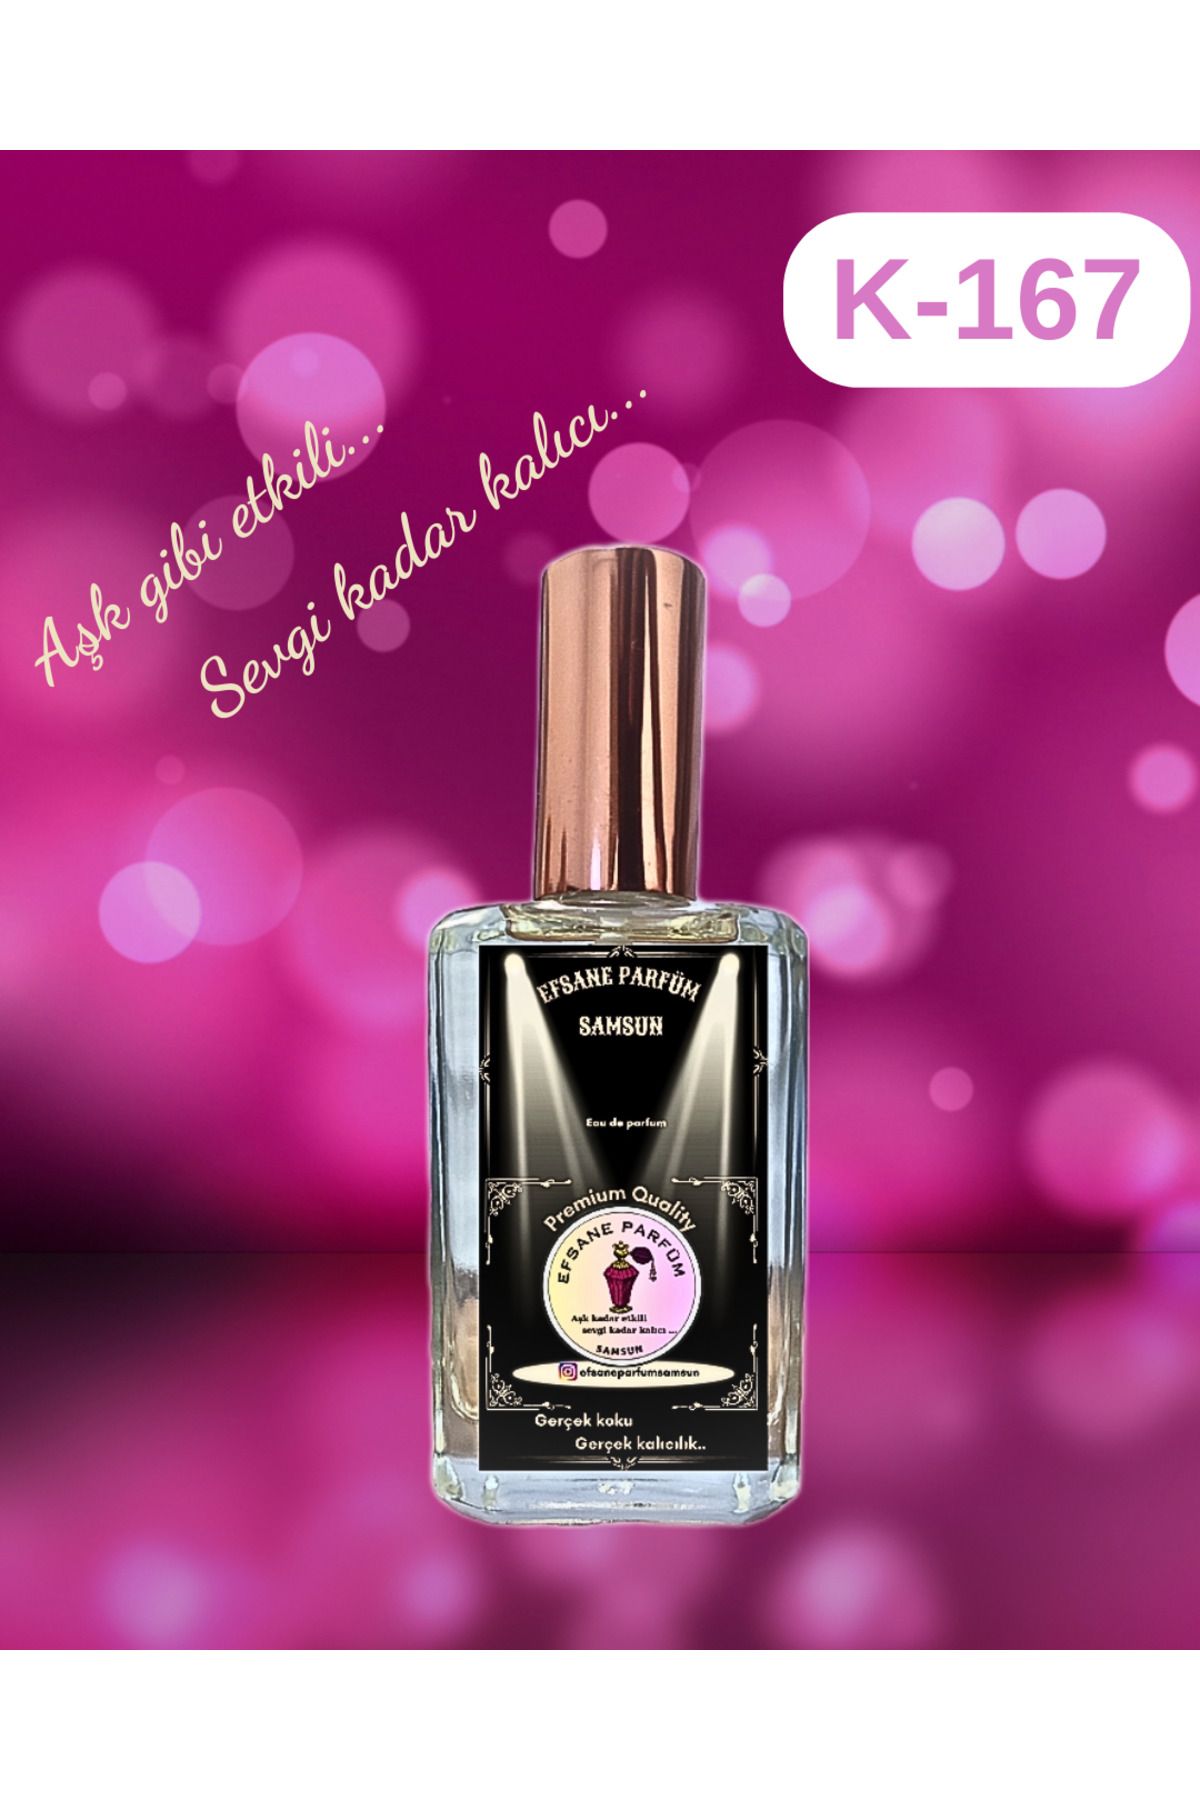 Efsane parfüm My Burberry Black Kadın Parfüm Muadil 50 ml E-167